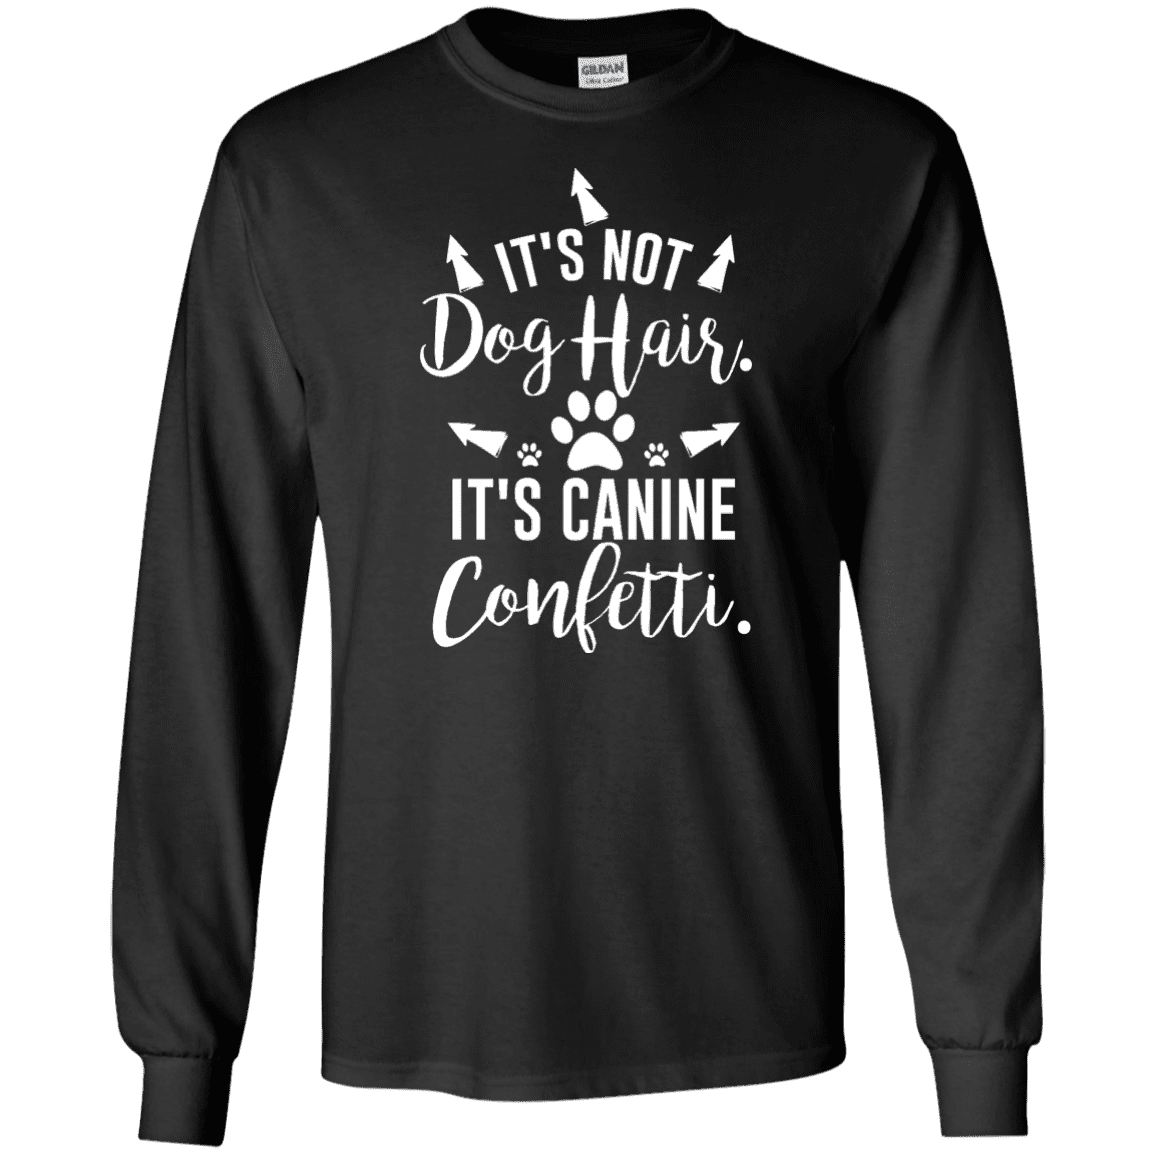 Canine Confetti - Long Sleeve T Shirt.